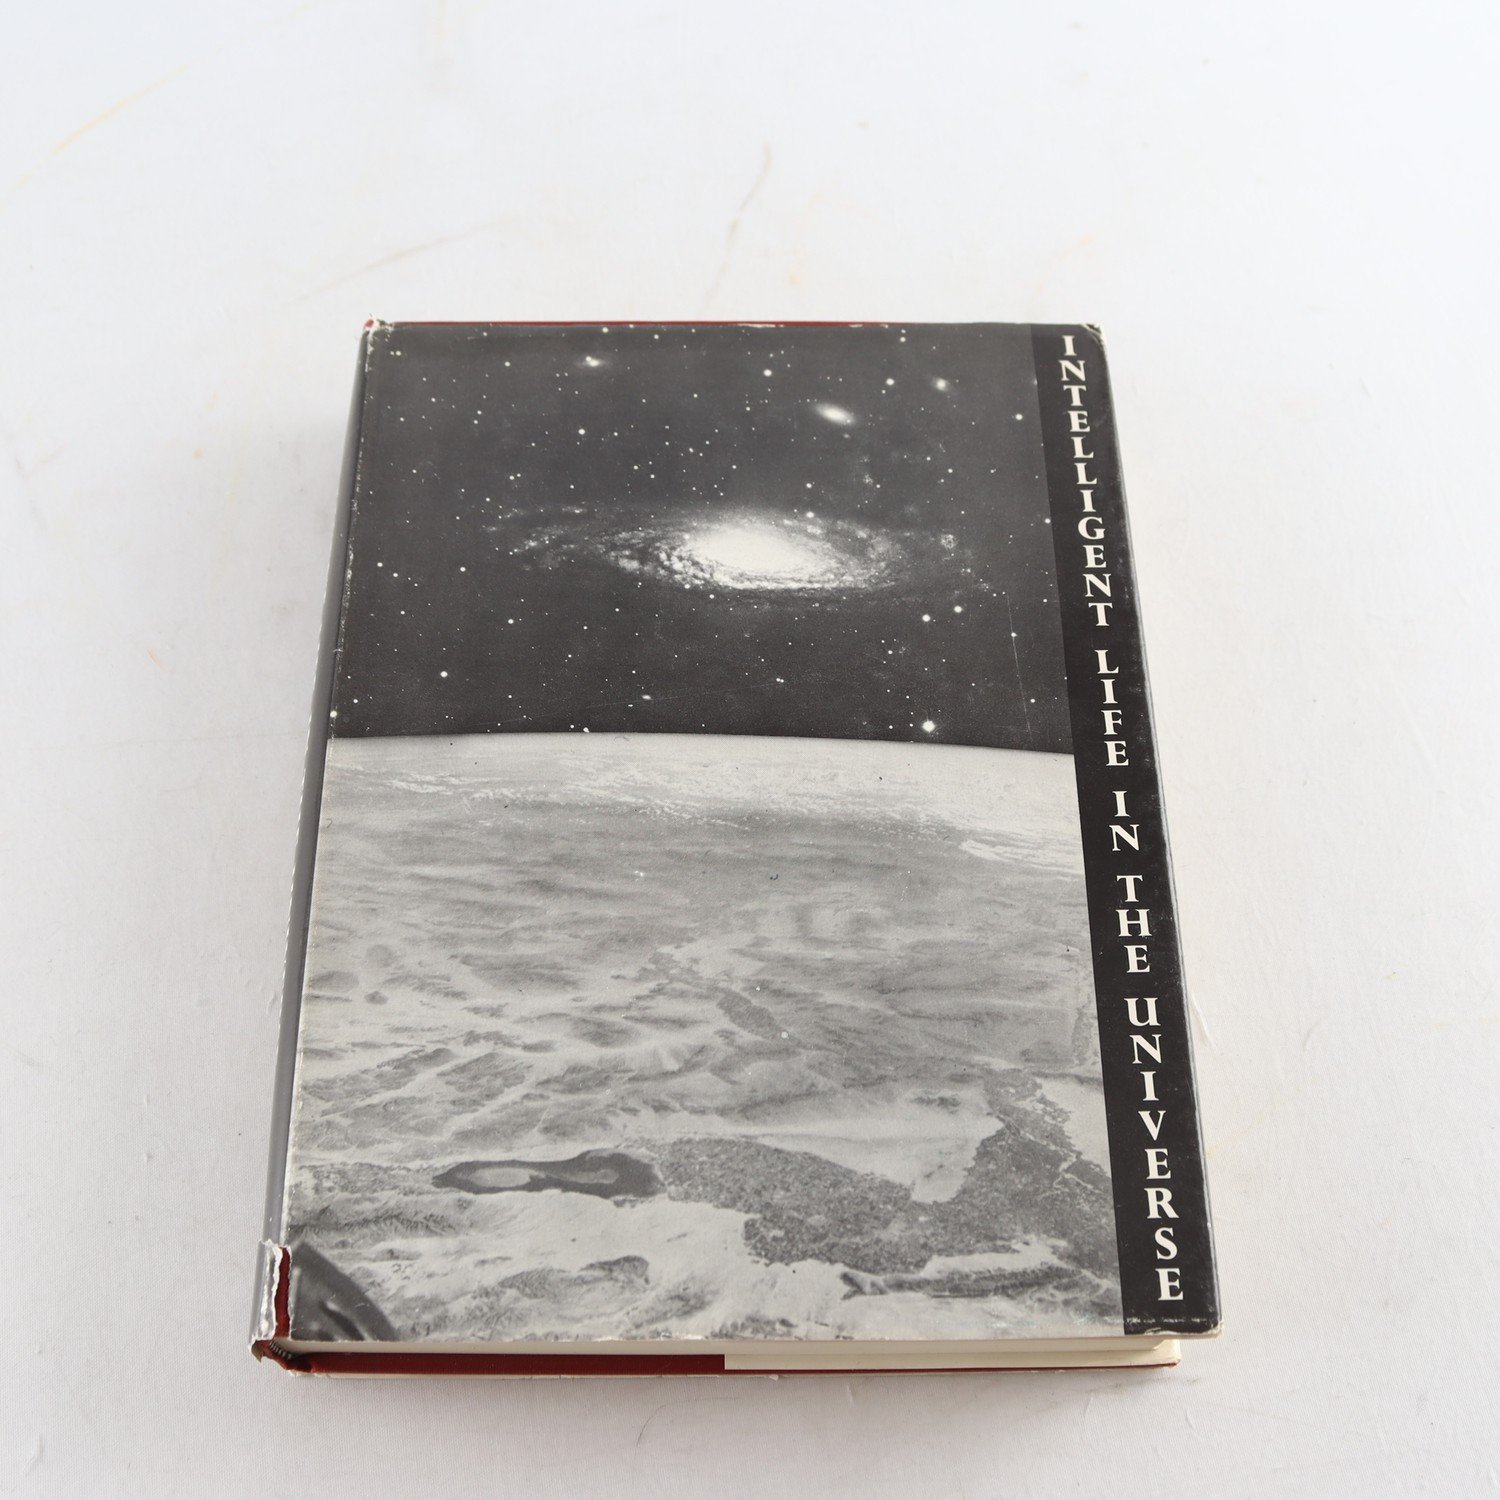 Intelligent Life in the Universe, I.S. Shklovskii & Carl Sagan, First edition